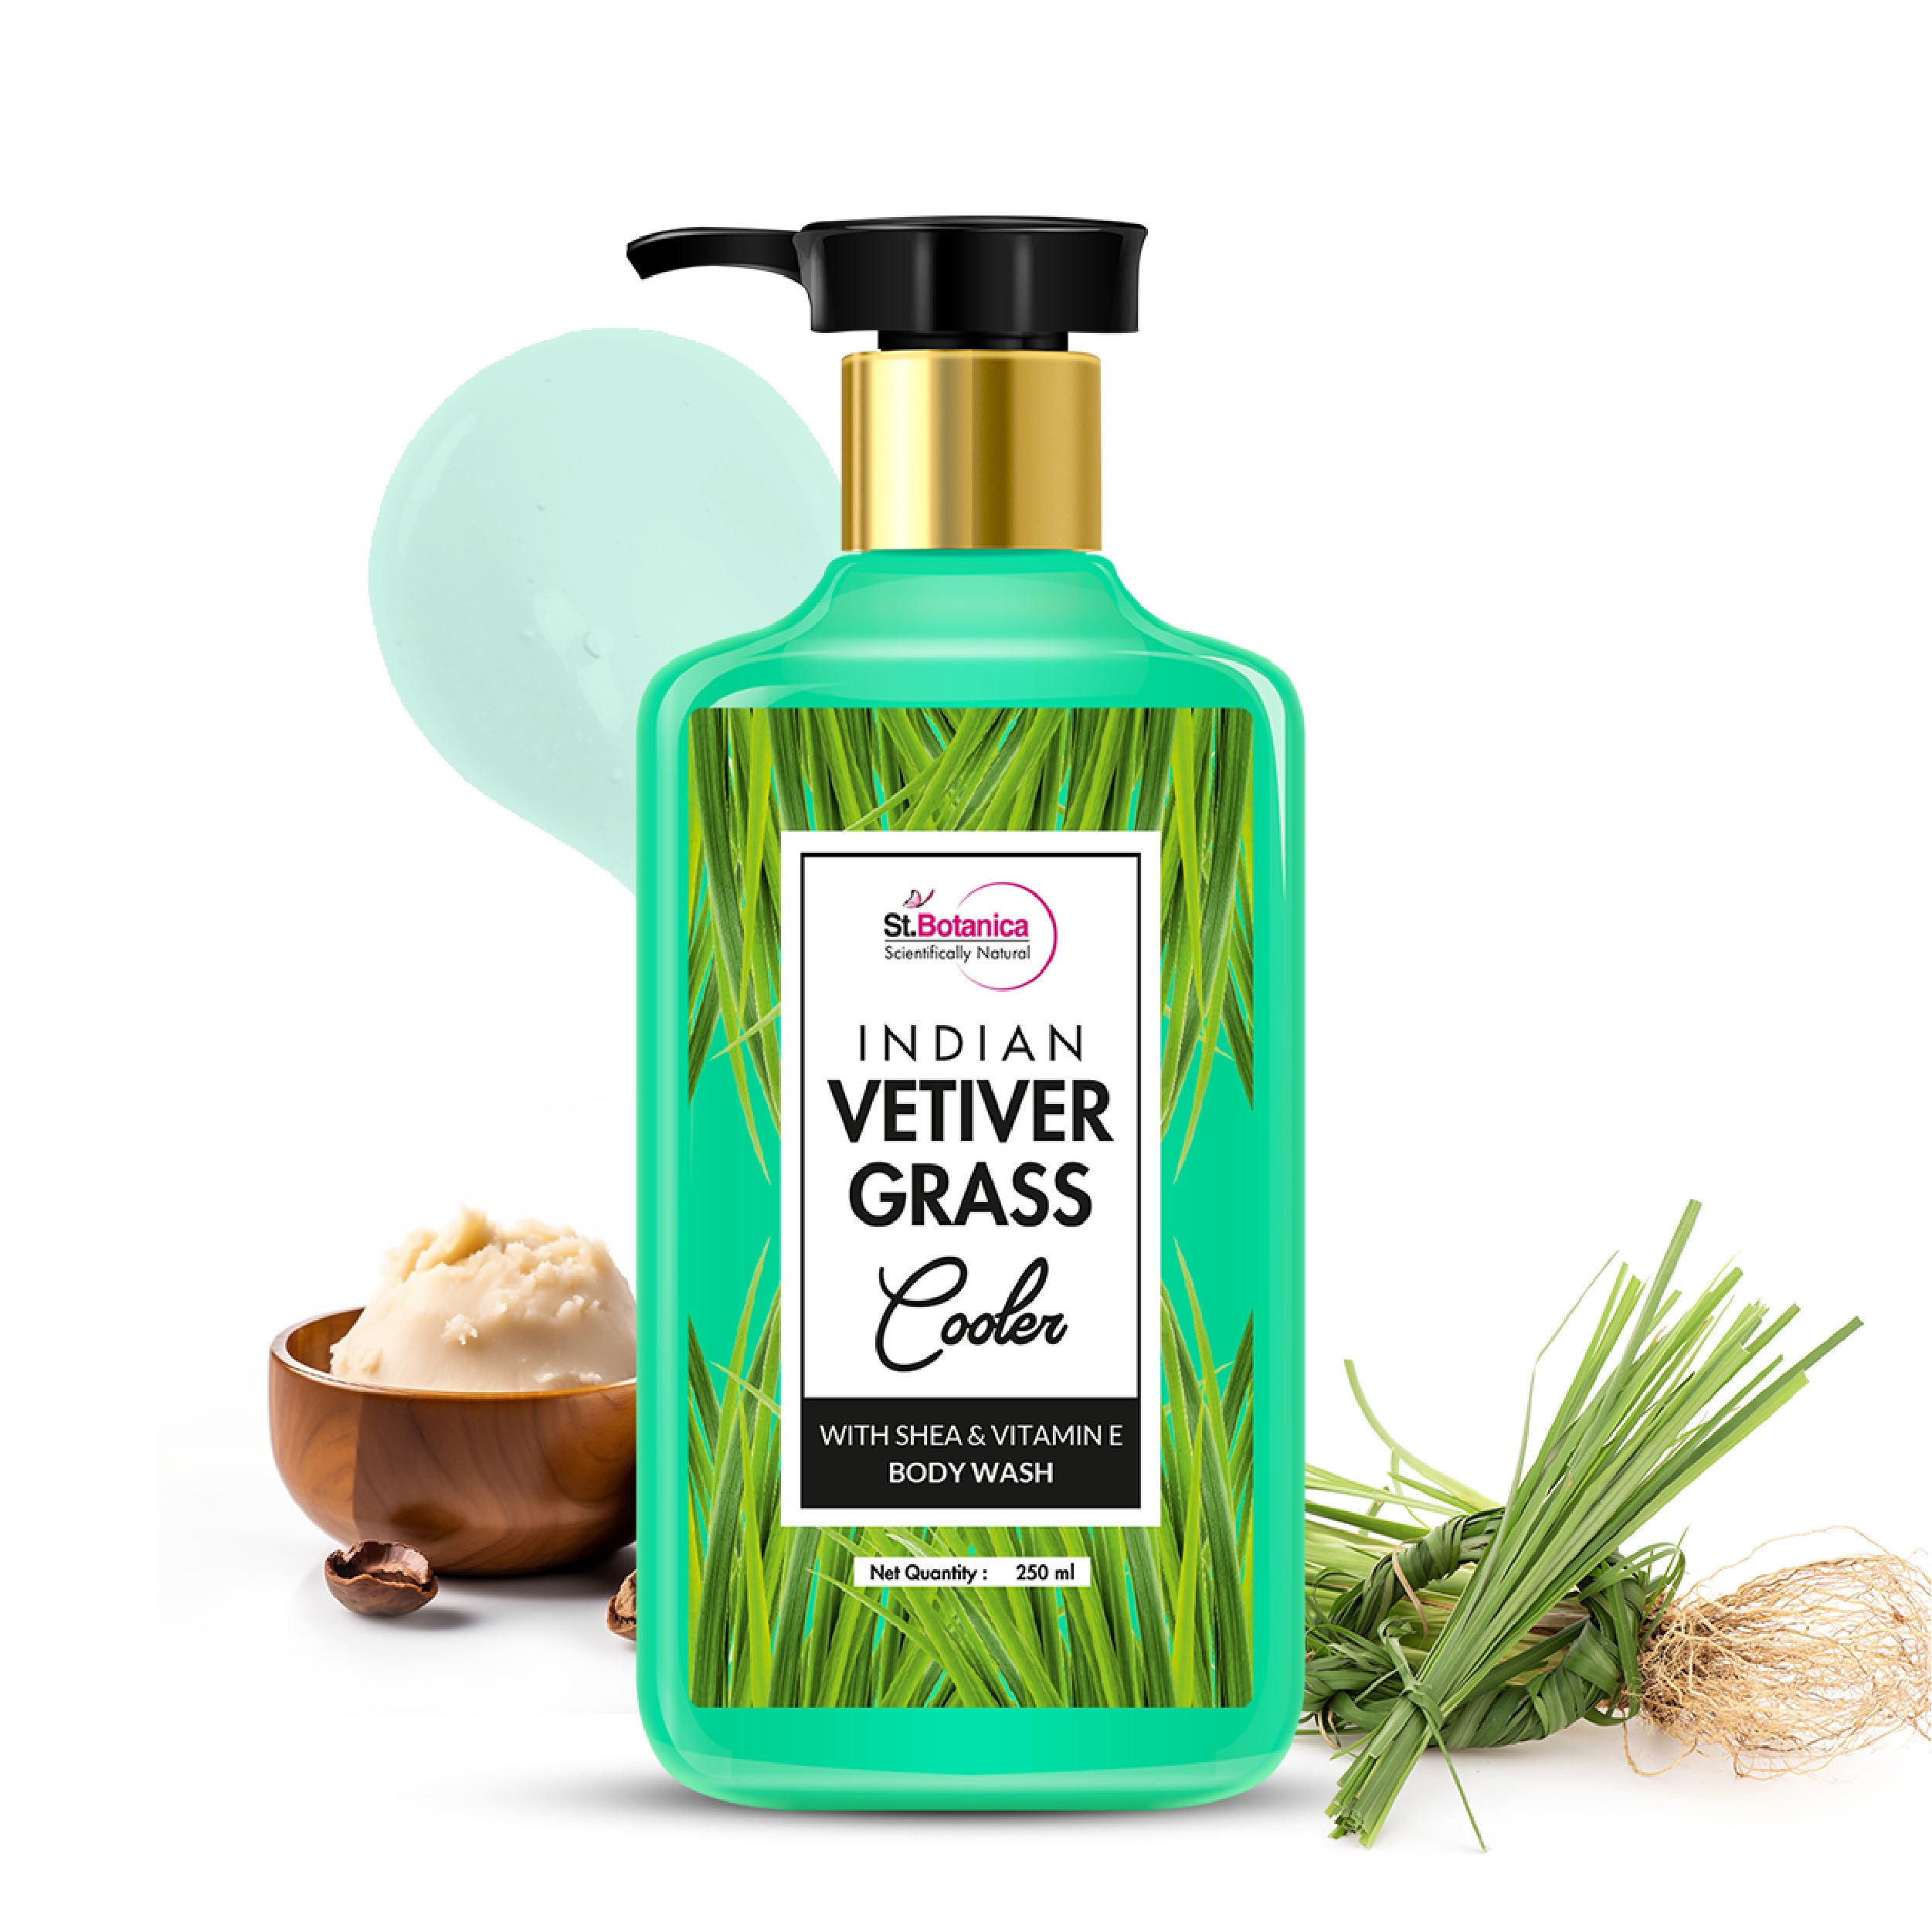 St.Botanica Indian Vetiver Grass Cooler Body Wash - With Shea & Vitamin E (Shower Gel), 250 ml